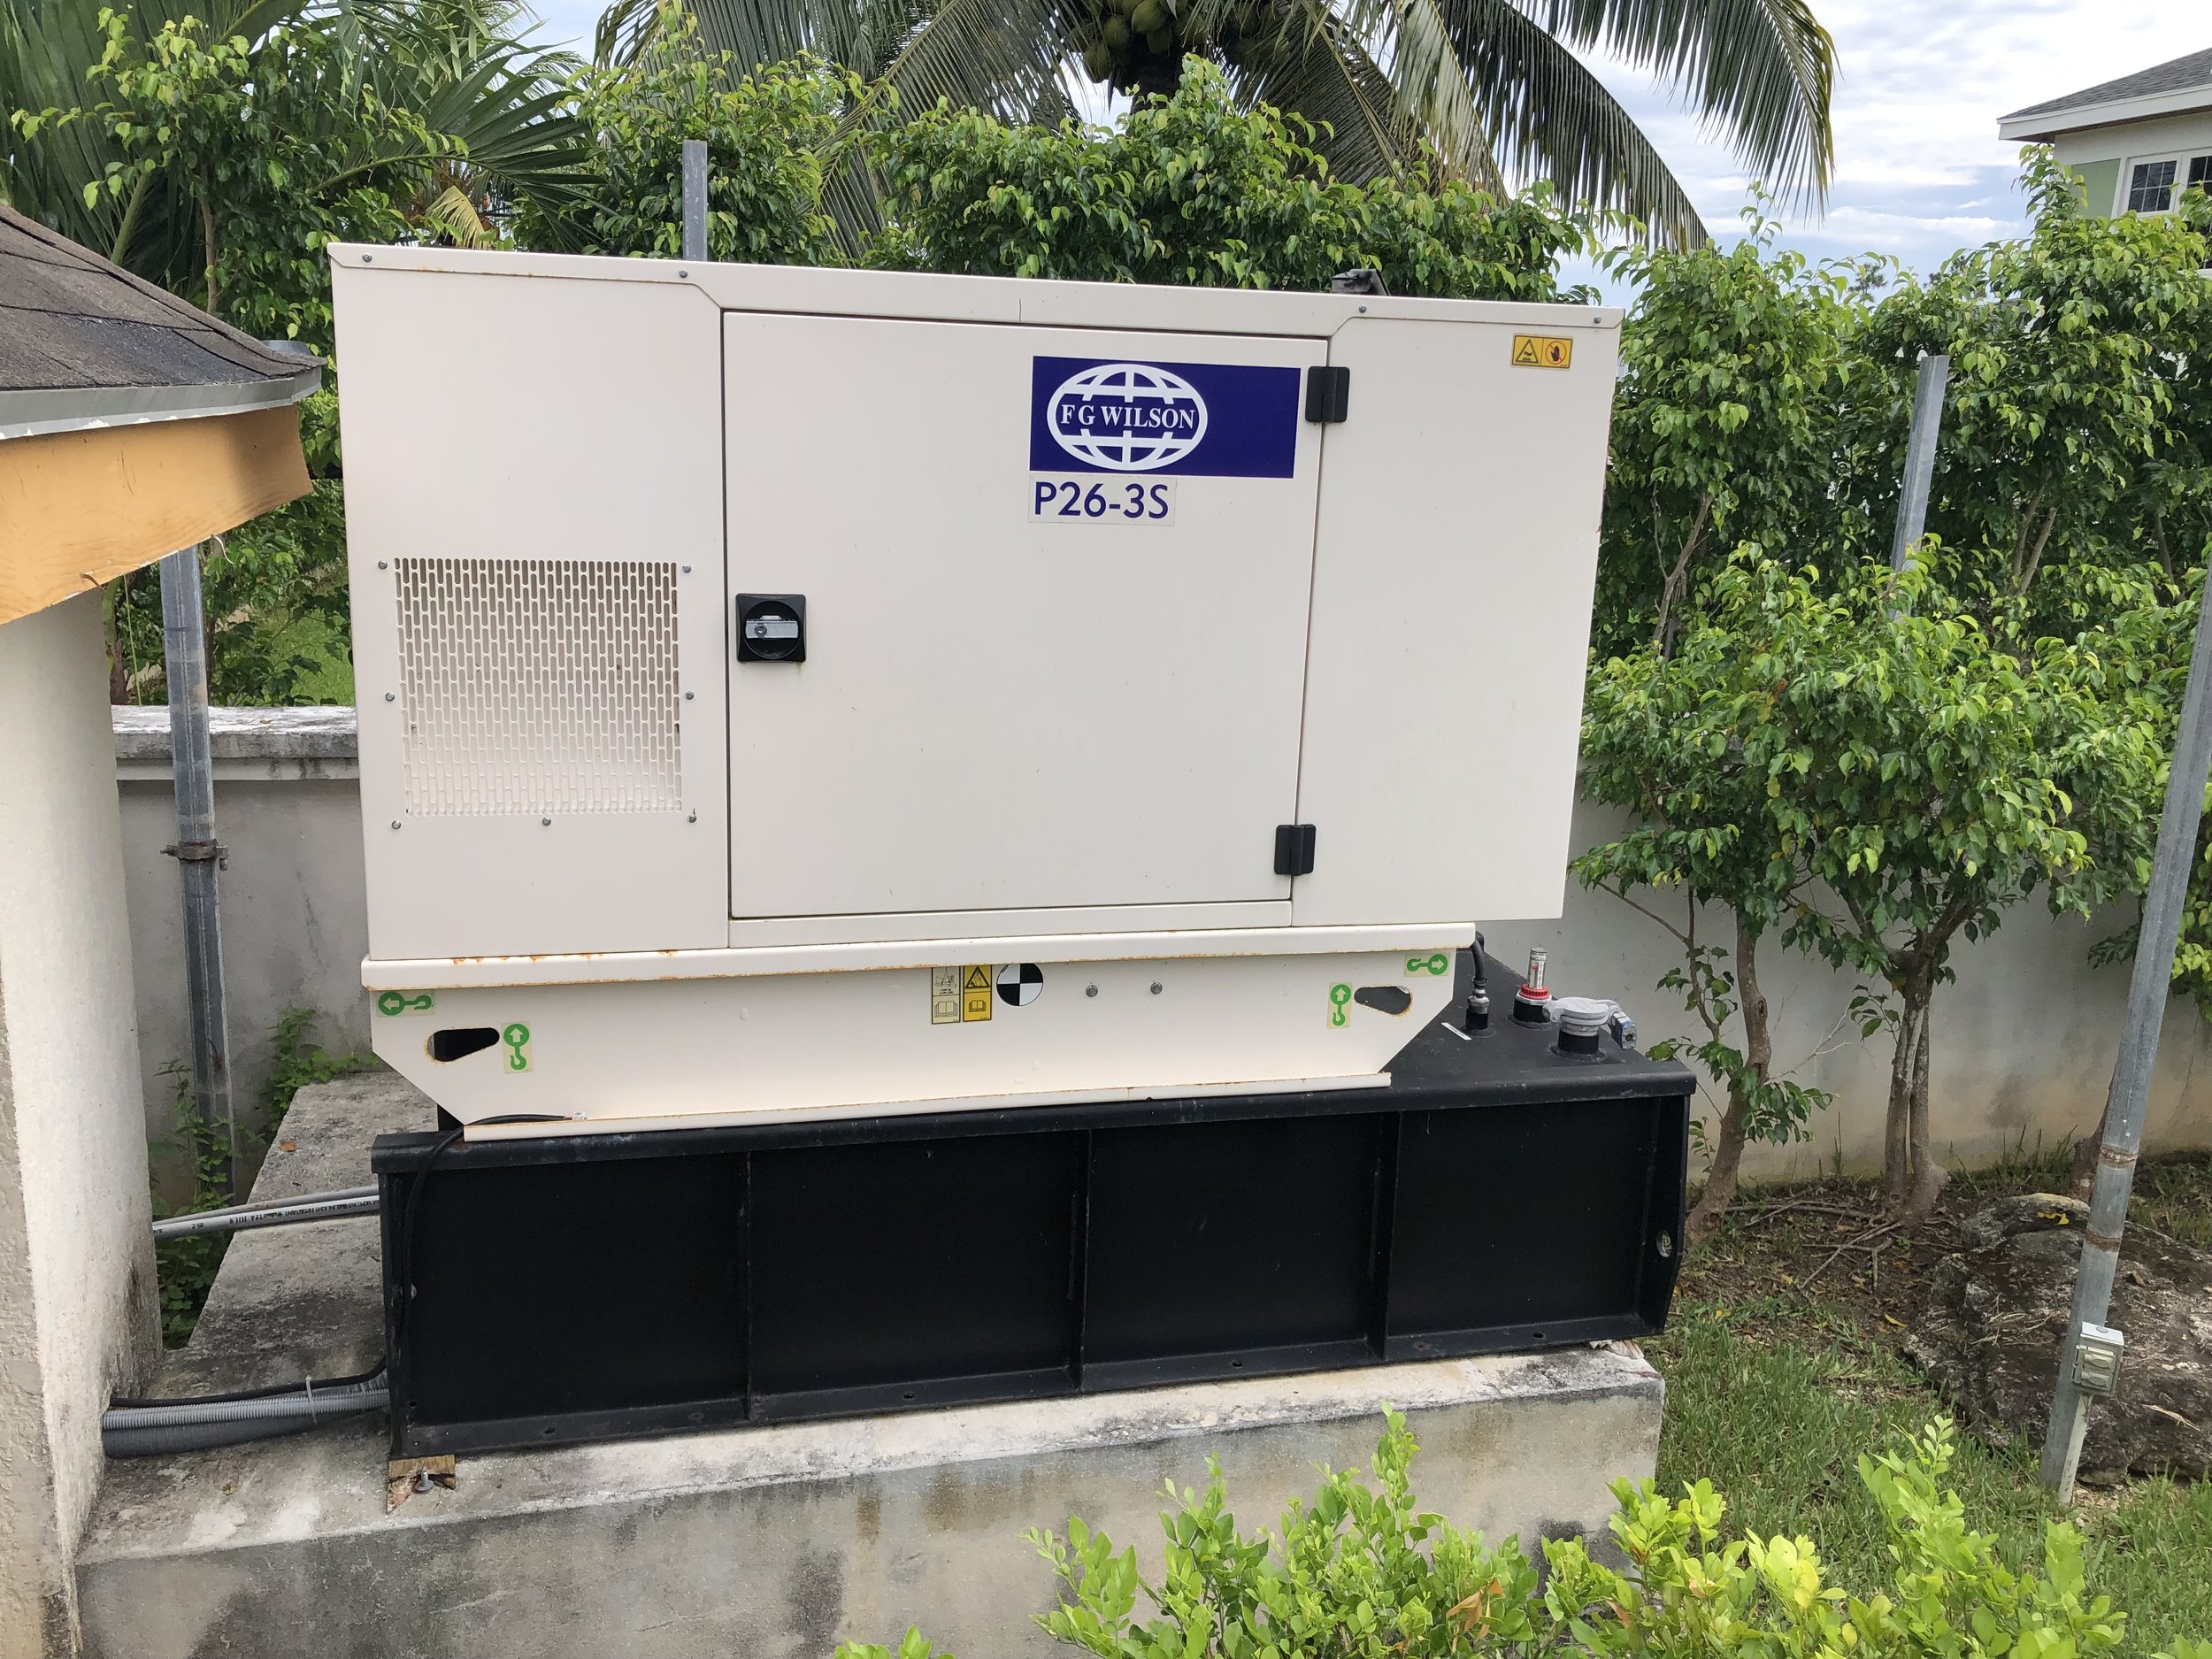 FG Wilson generators installed in The Bahamas